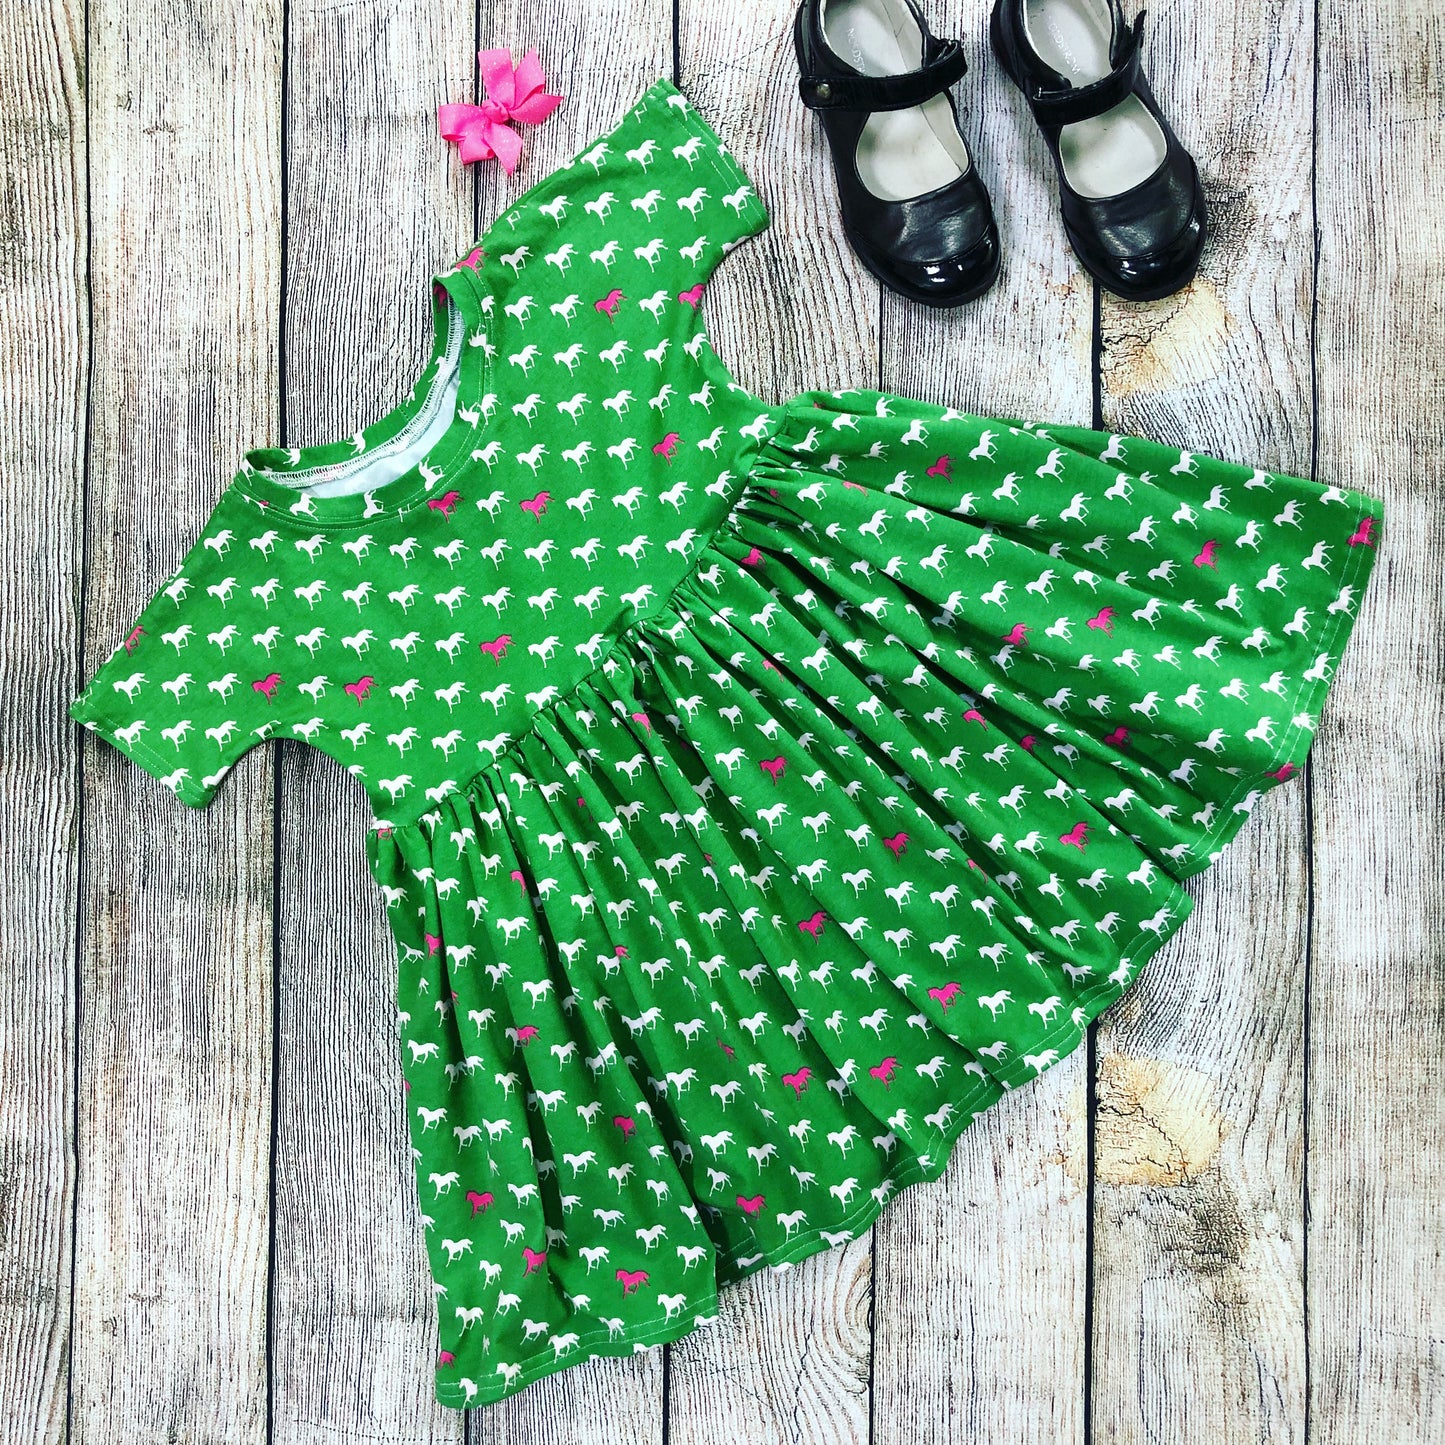 Playful Twirl Dress Size 4T - Horses on Green - Sample Sale